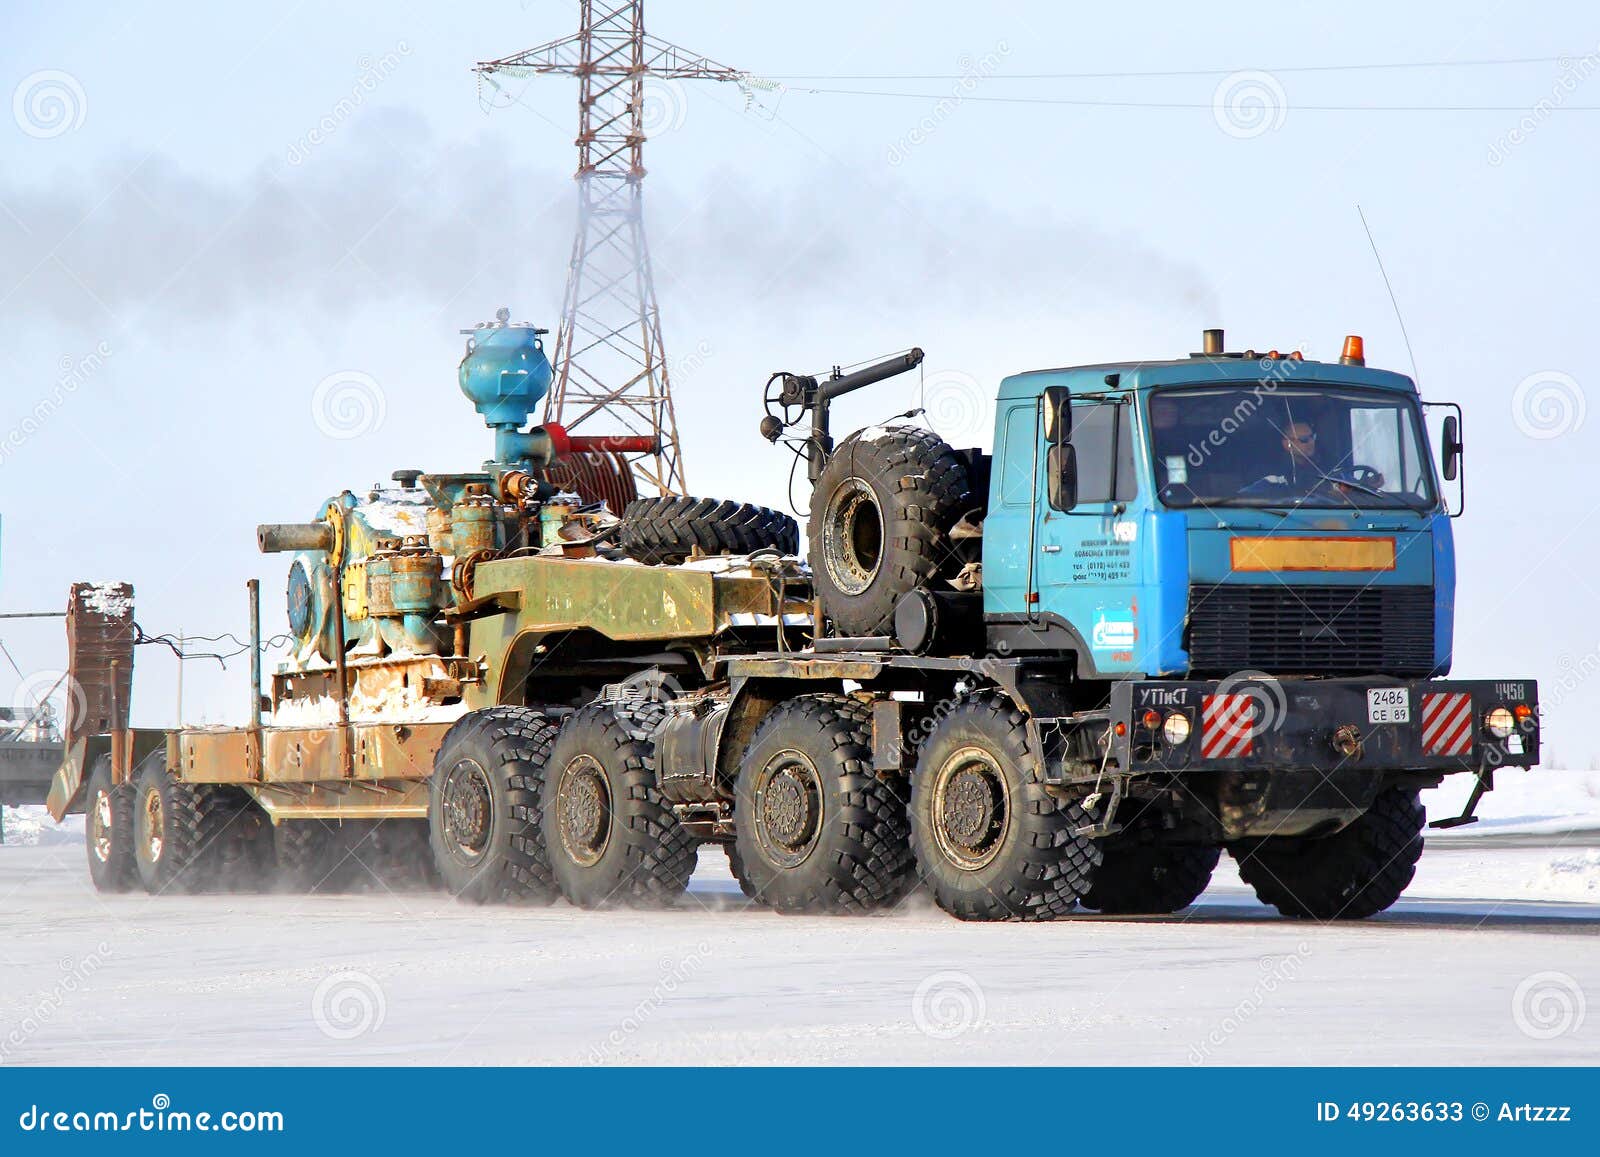 veicoli militari Mzkt-volat-novyy-urengoy-russia-march-heavy-semi-trailer-truck-interurban-road-49263633